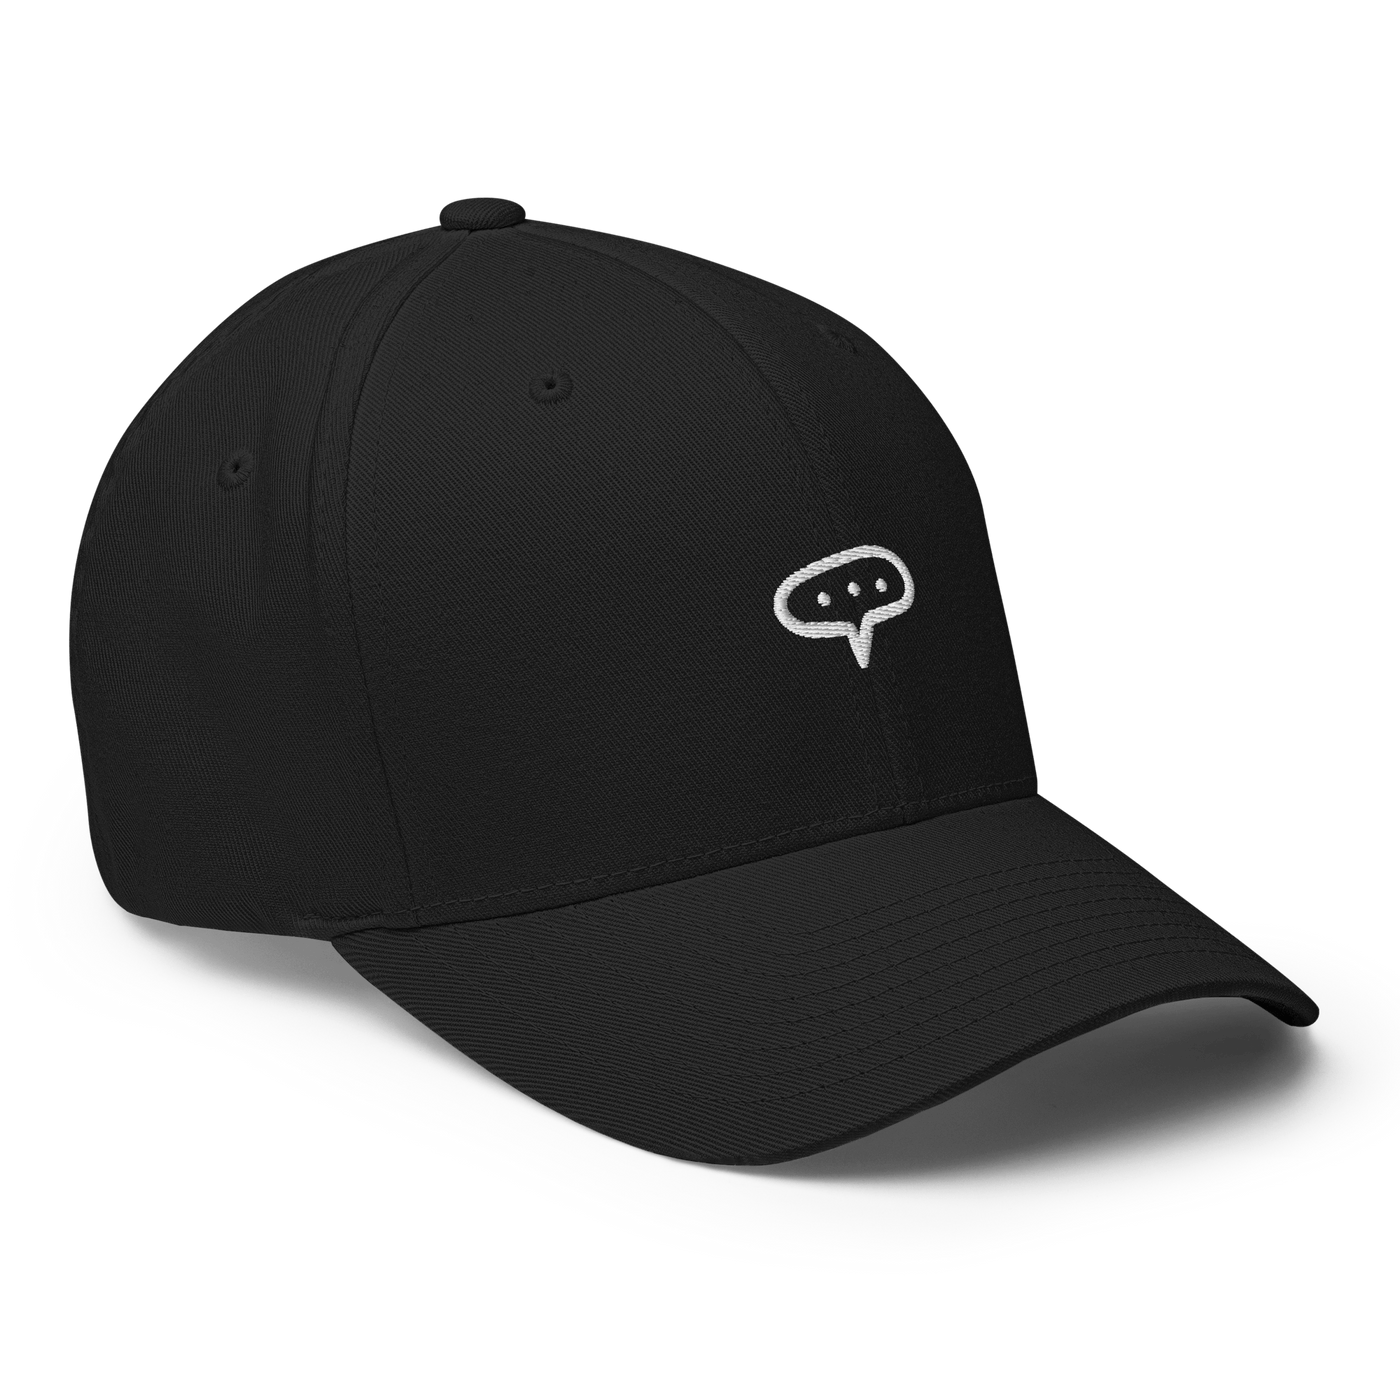 Thinking Flexfit Cap - Black - S/M - Just Another Cap Store